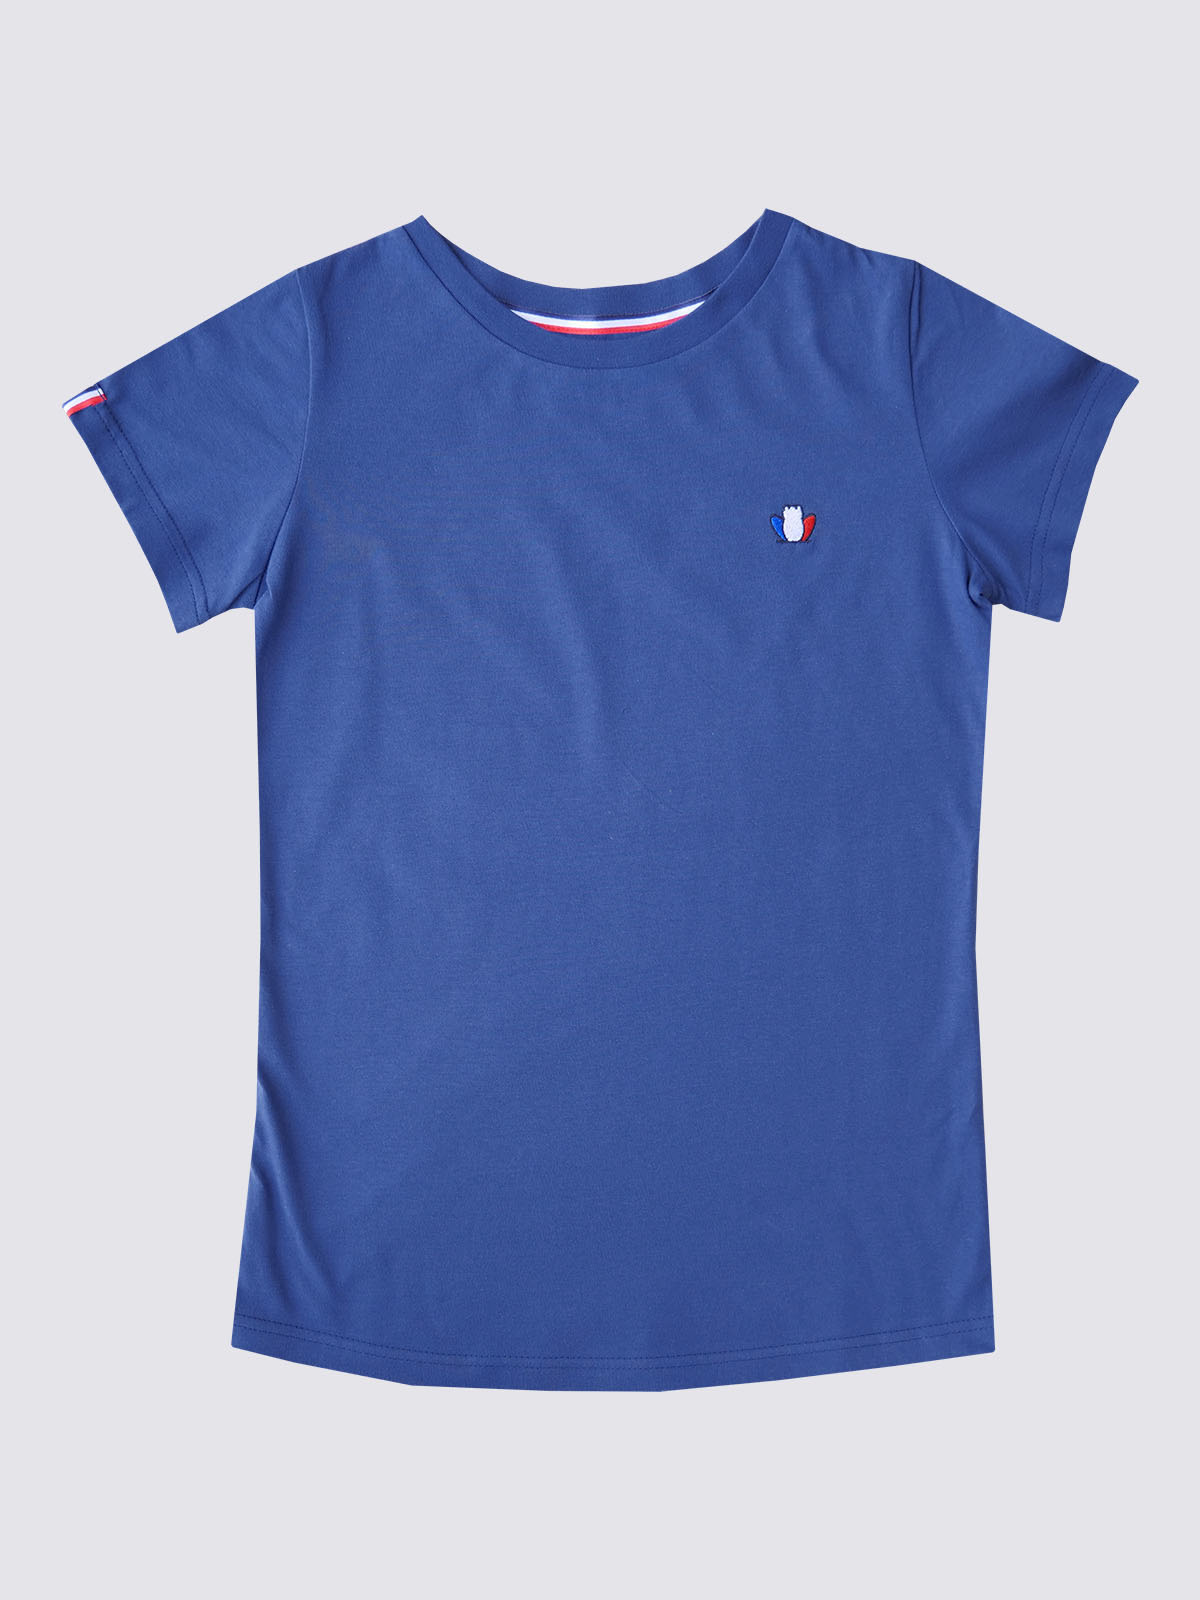 t-shirt-femme-made-in-france-l-authentique-bleu